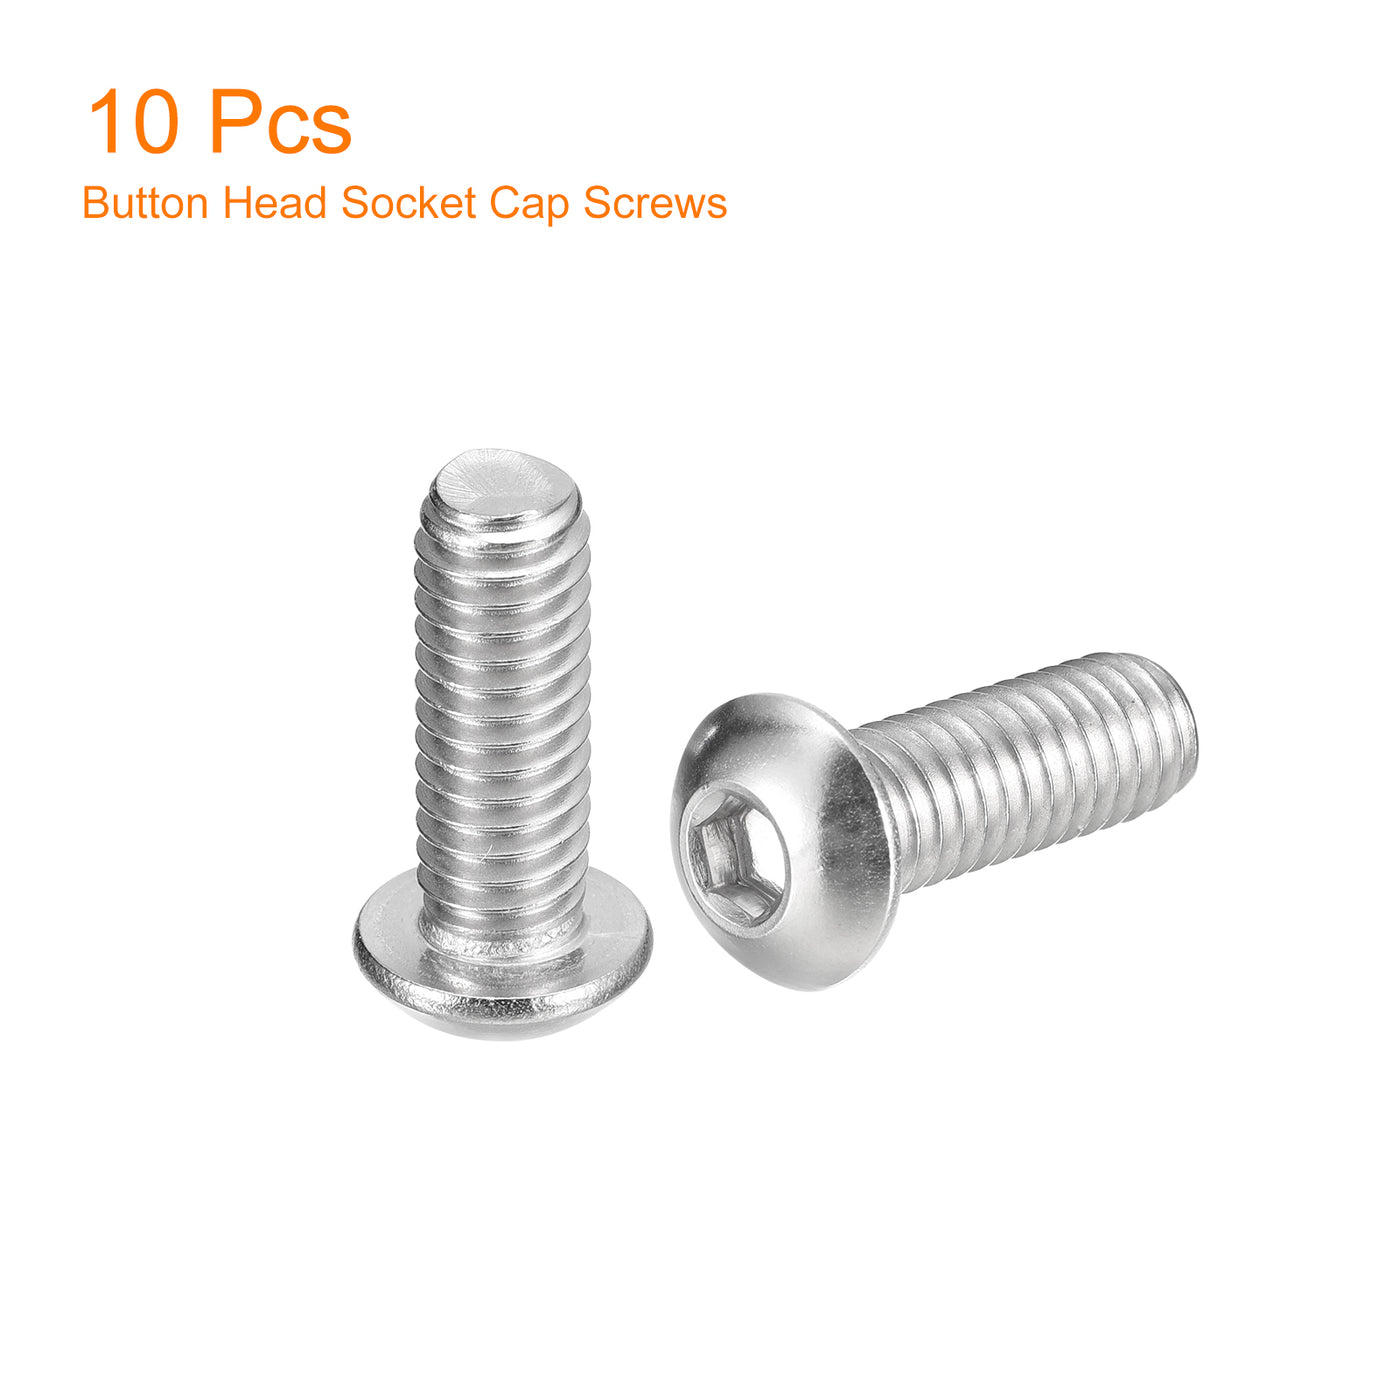 uxcell Uxcell 5/16-18x7/8" Button Head Socket Cap Screws, 10pcs 304 Stainless Steel Screws